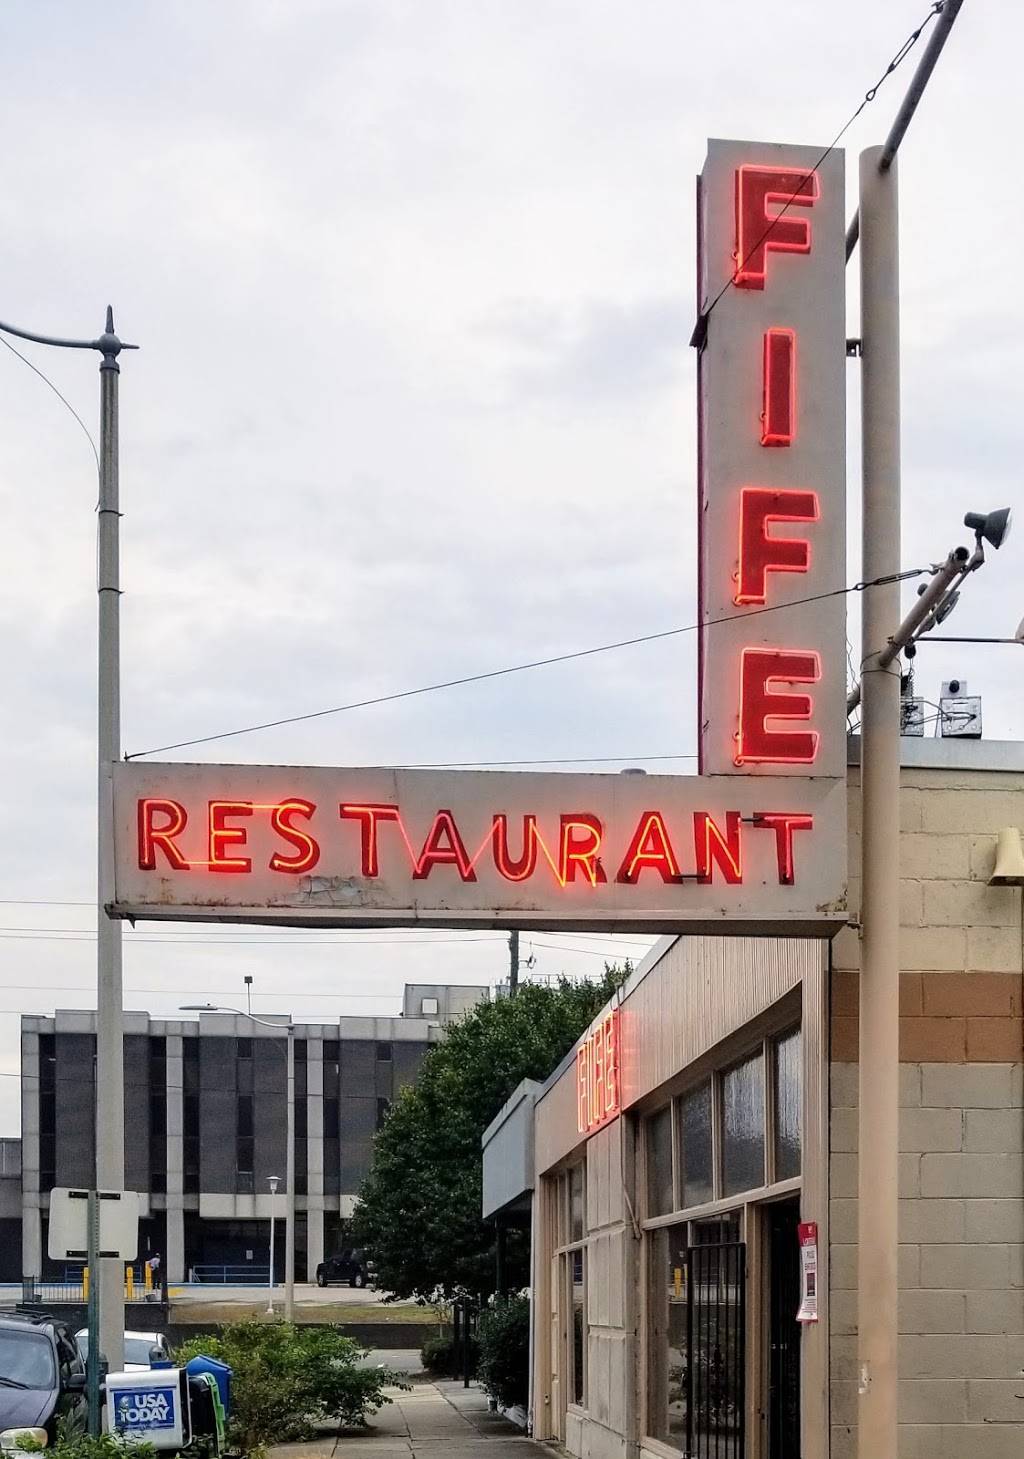 Fifes Restaurant | 2321 4th Ave N, Birmingham, AL 35203, USA | Phone: (205) 254-9167